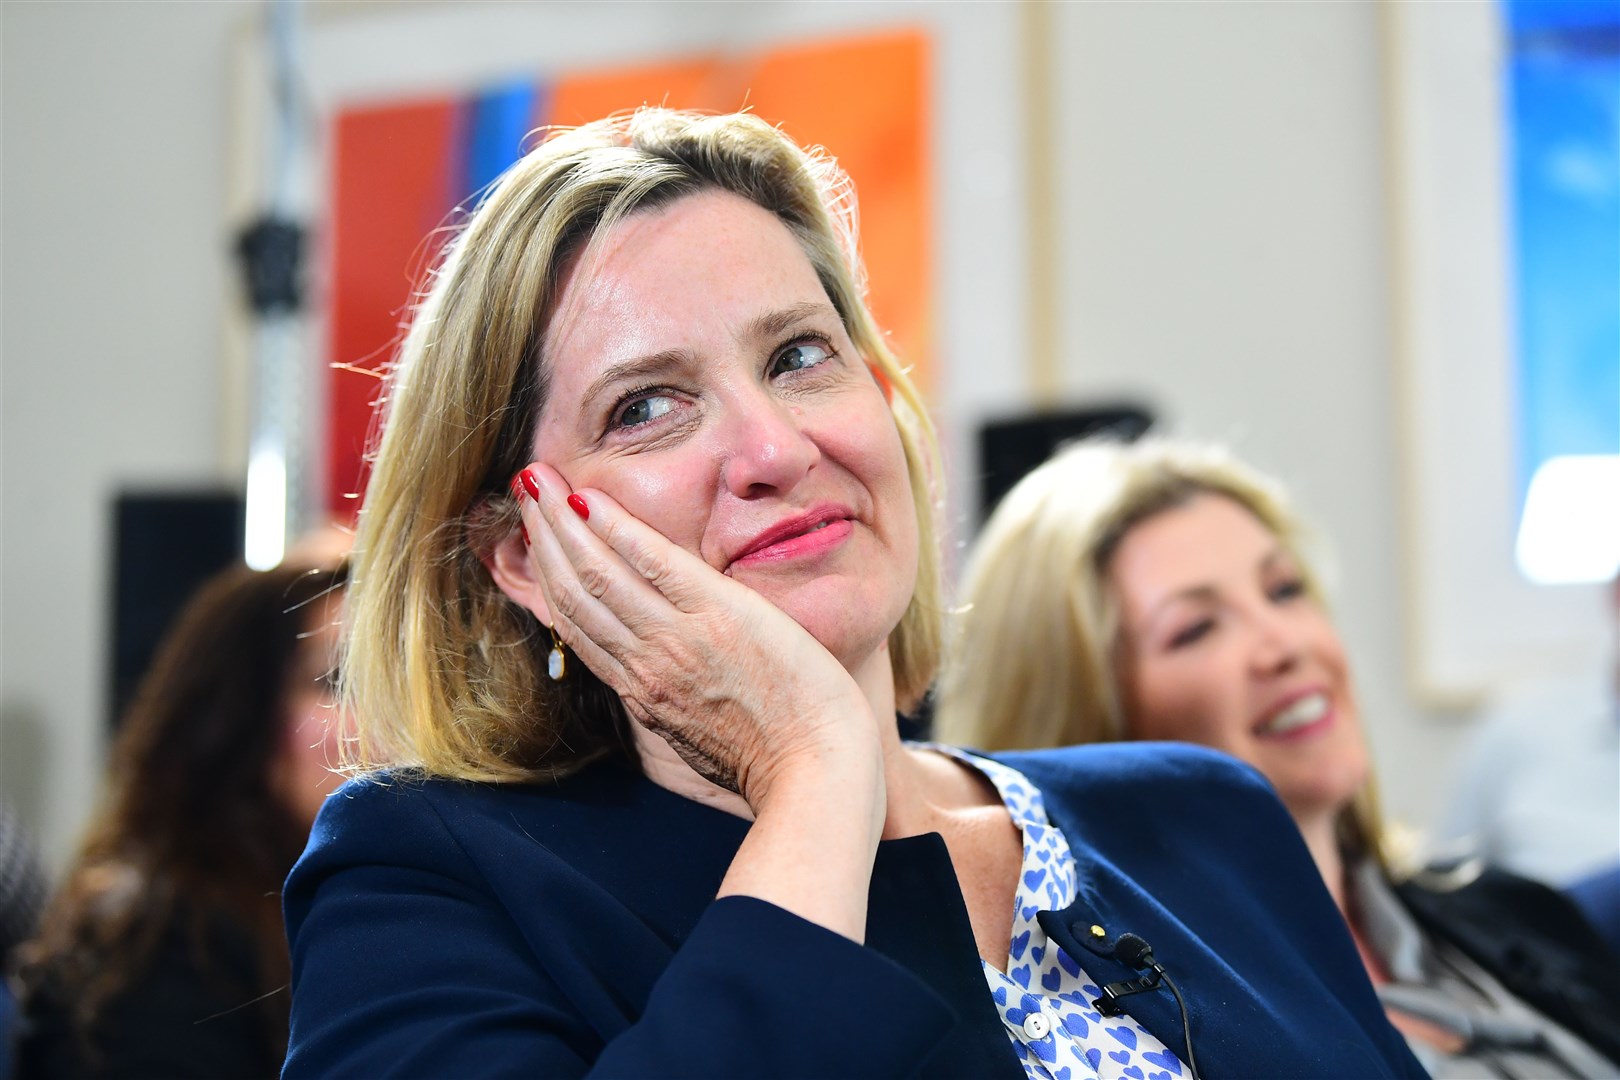 Amber Rudd served as Home Secretary under Theresa May and Energy Secretary under David Cameron (Victoria Jones/PA)